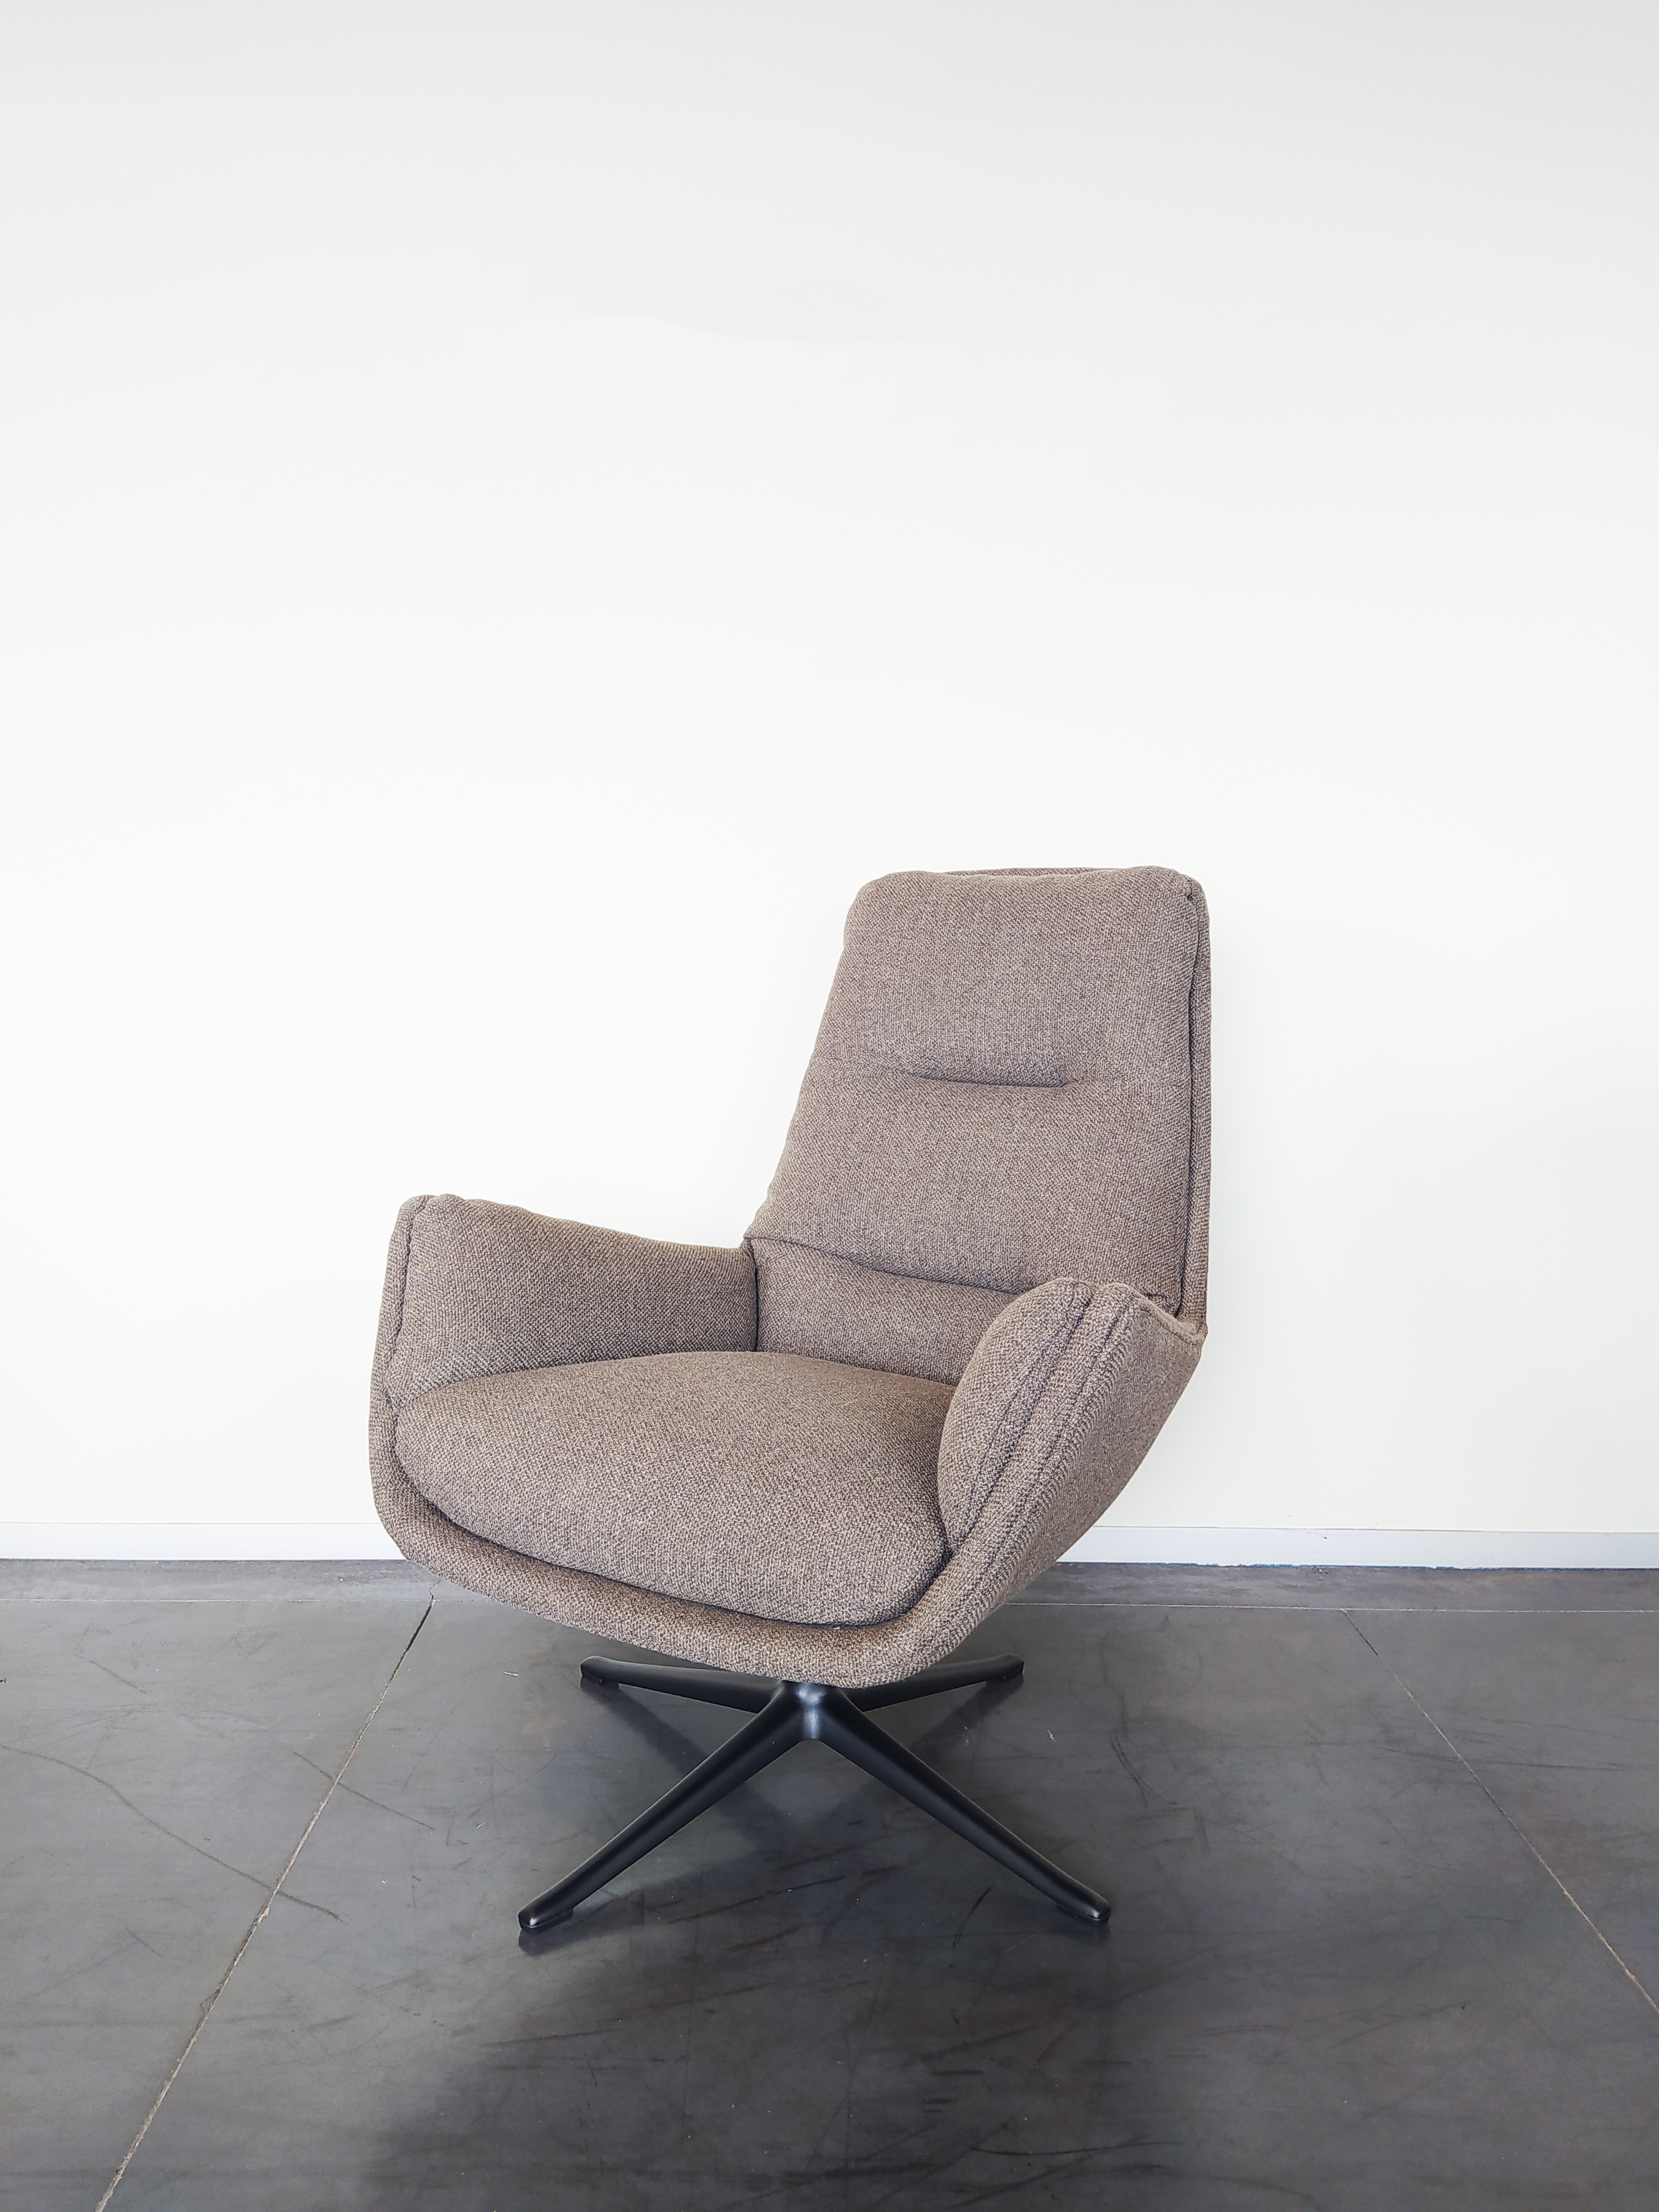 Evolution-hasselt-interieurwinkel-meubelen-design-stof-fauteuil-otto